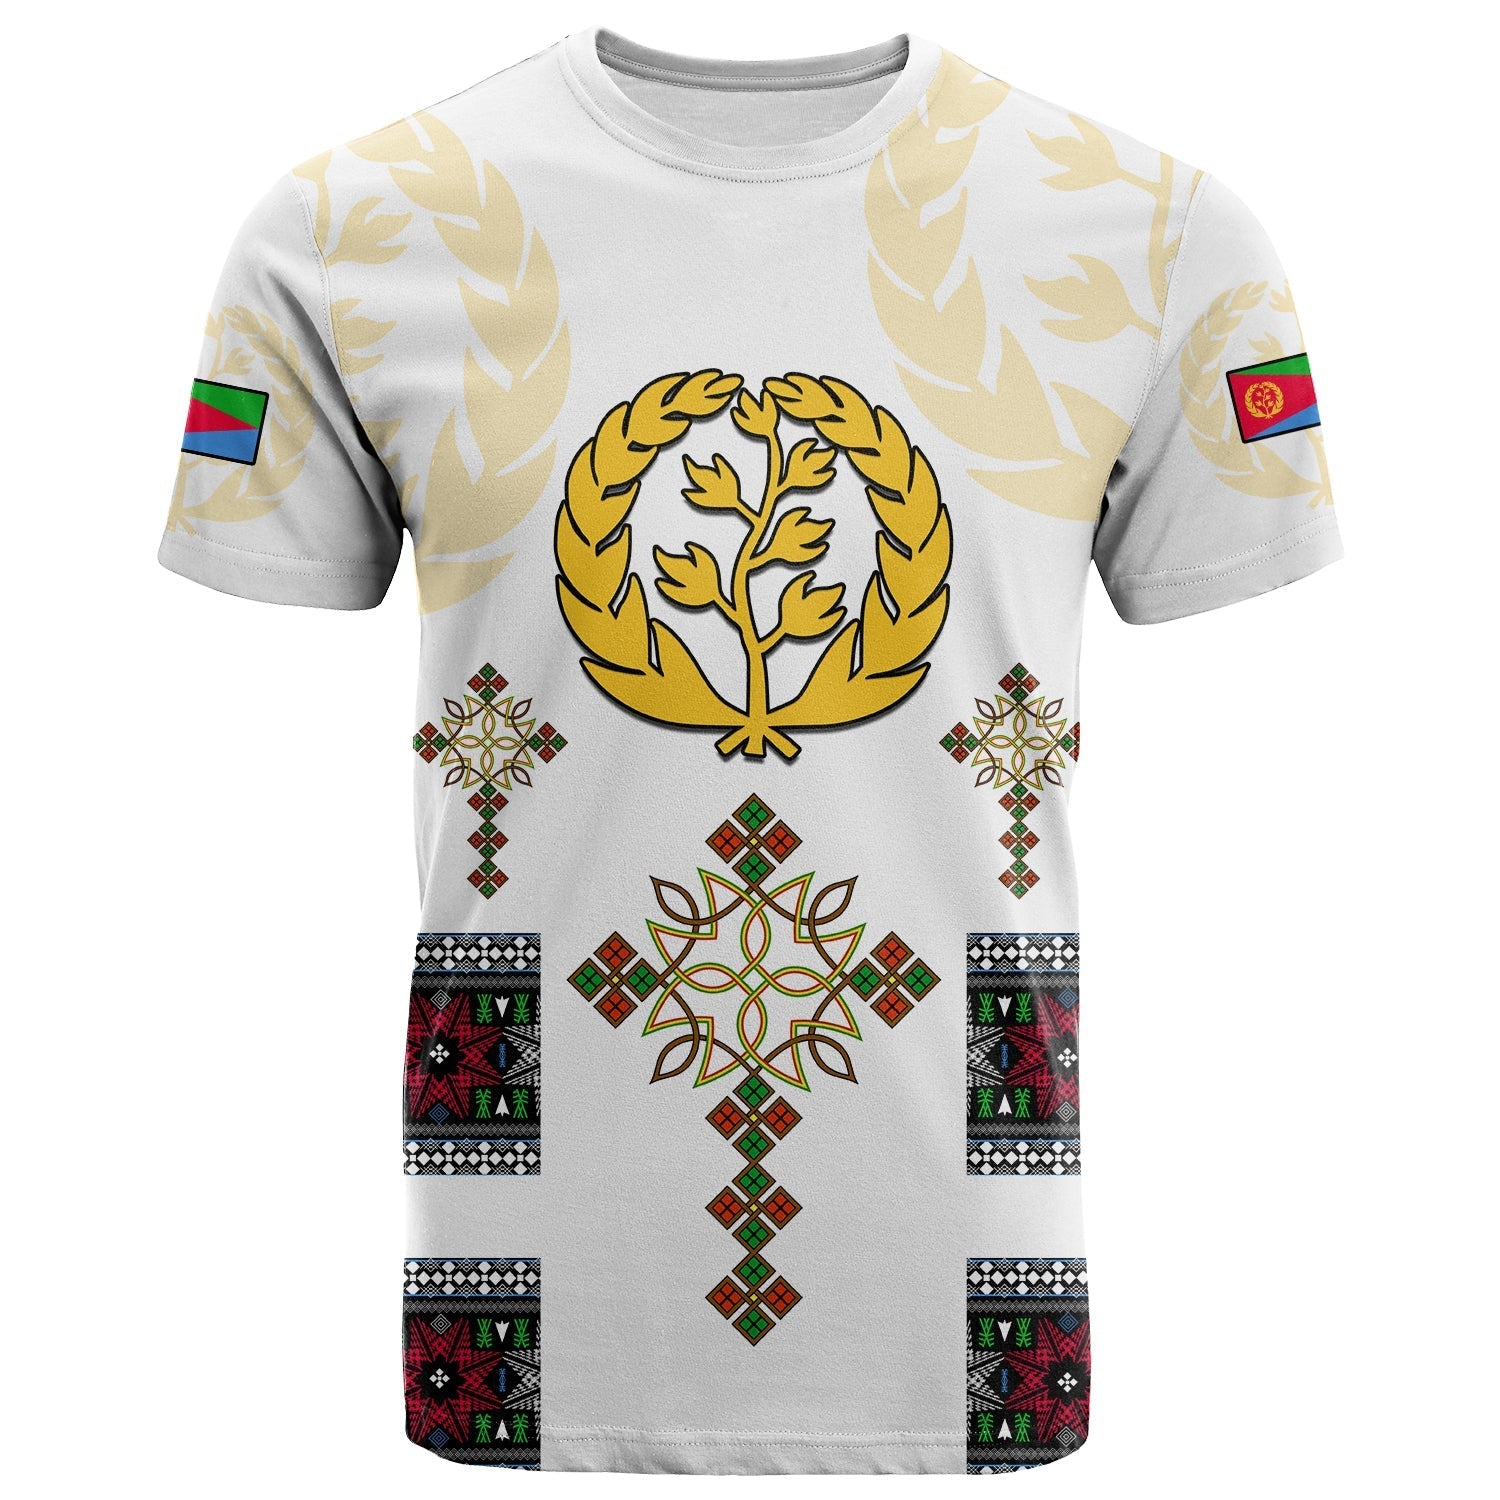 eritrea-cross-t-shirt-independence-day-proud-eritrean